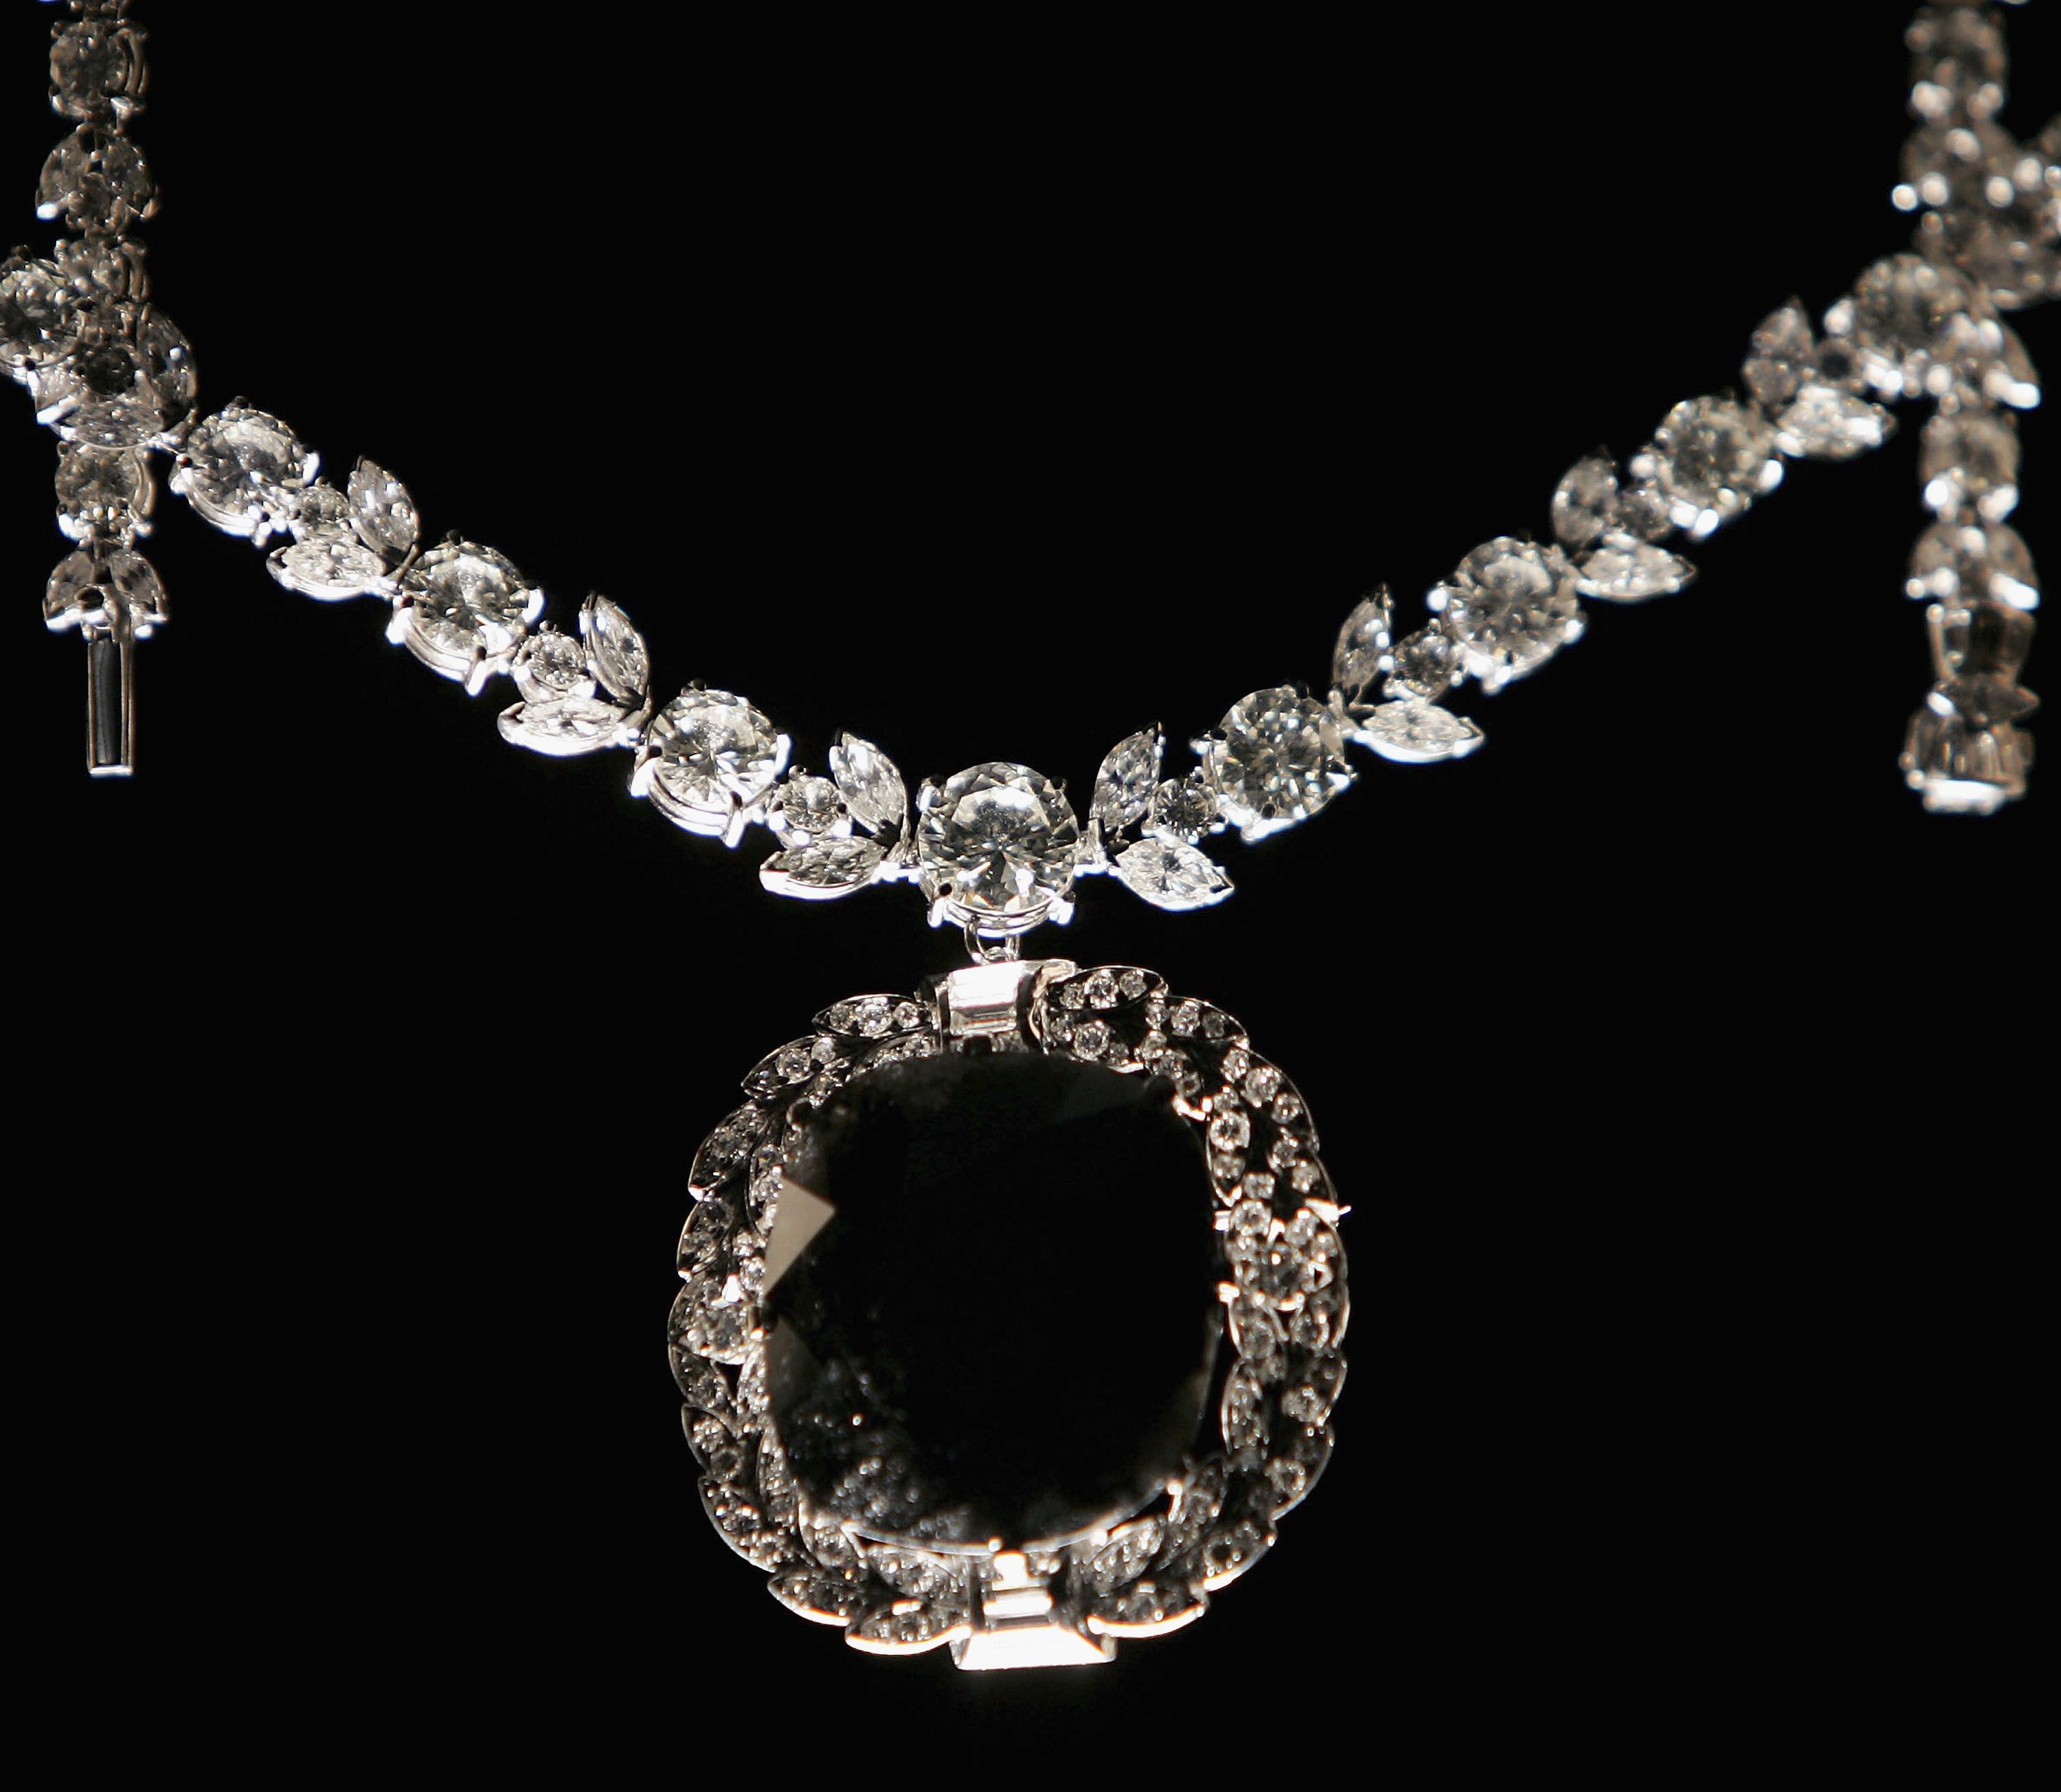 the-black-orlov-diamond-is-displayed-by-its-handler-during-news-photo-1588798967.jpg